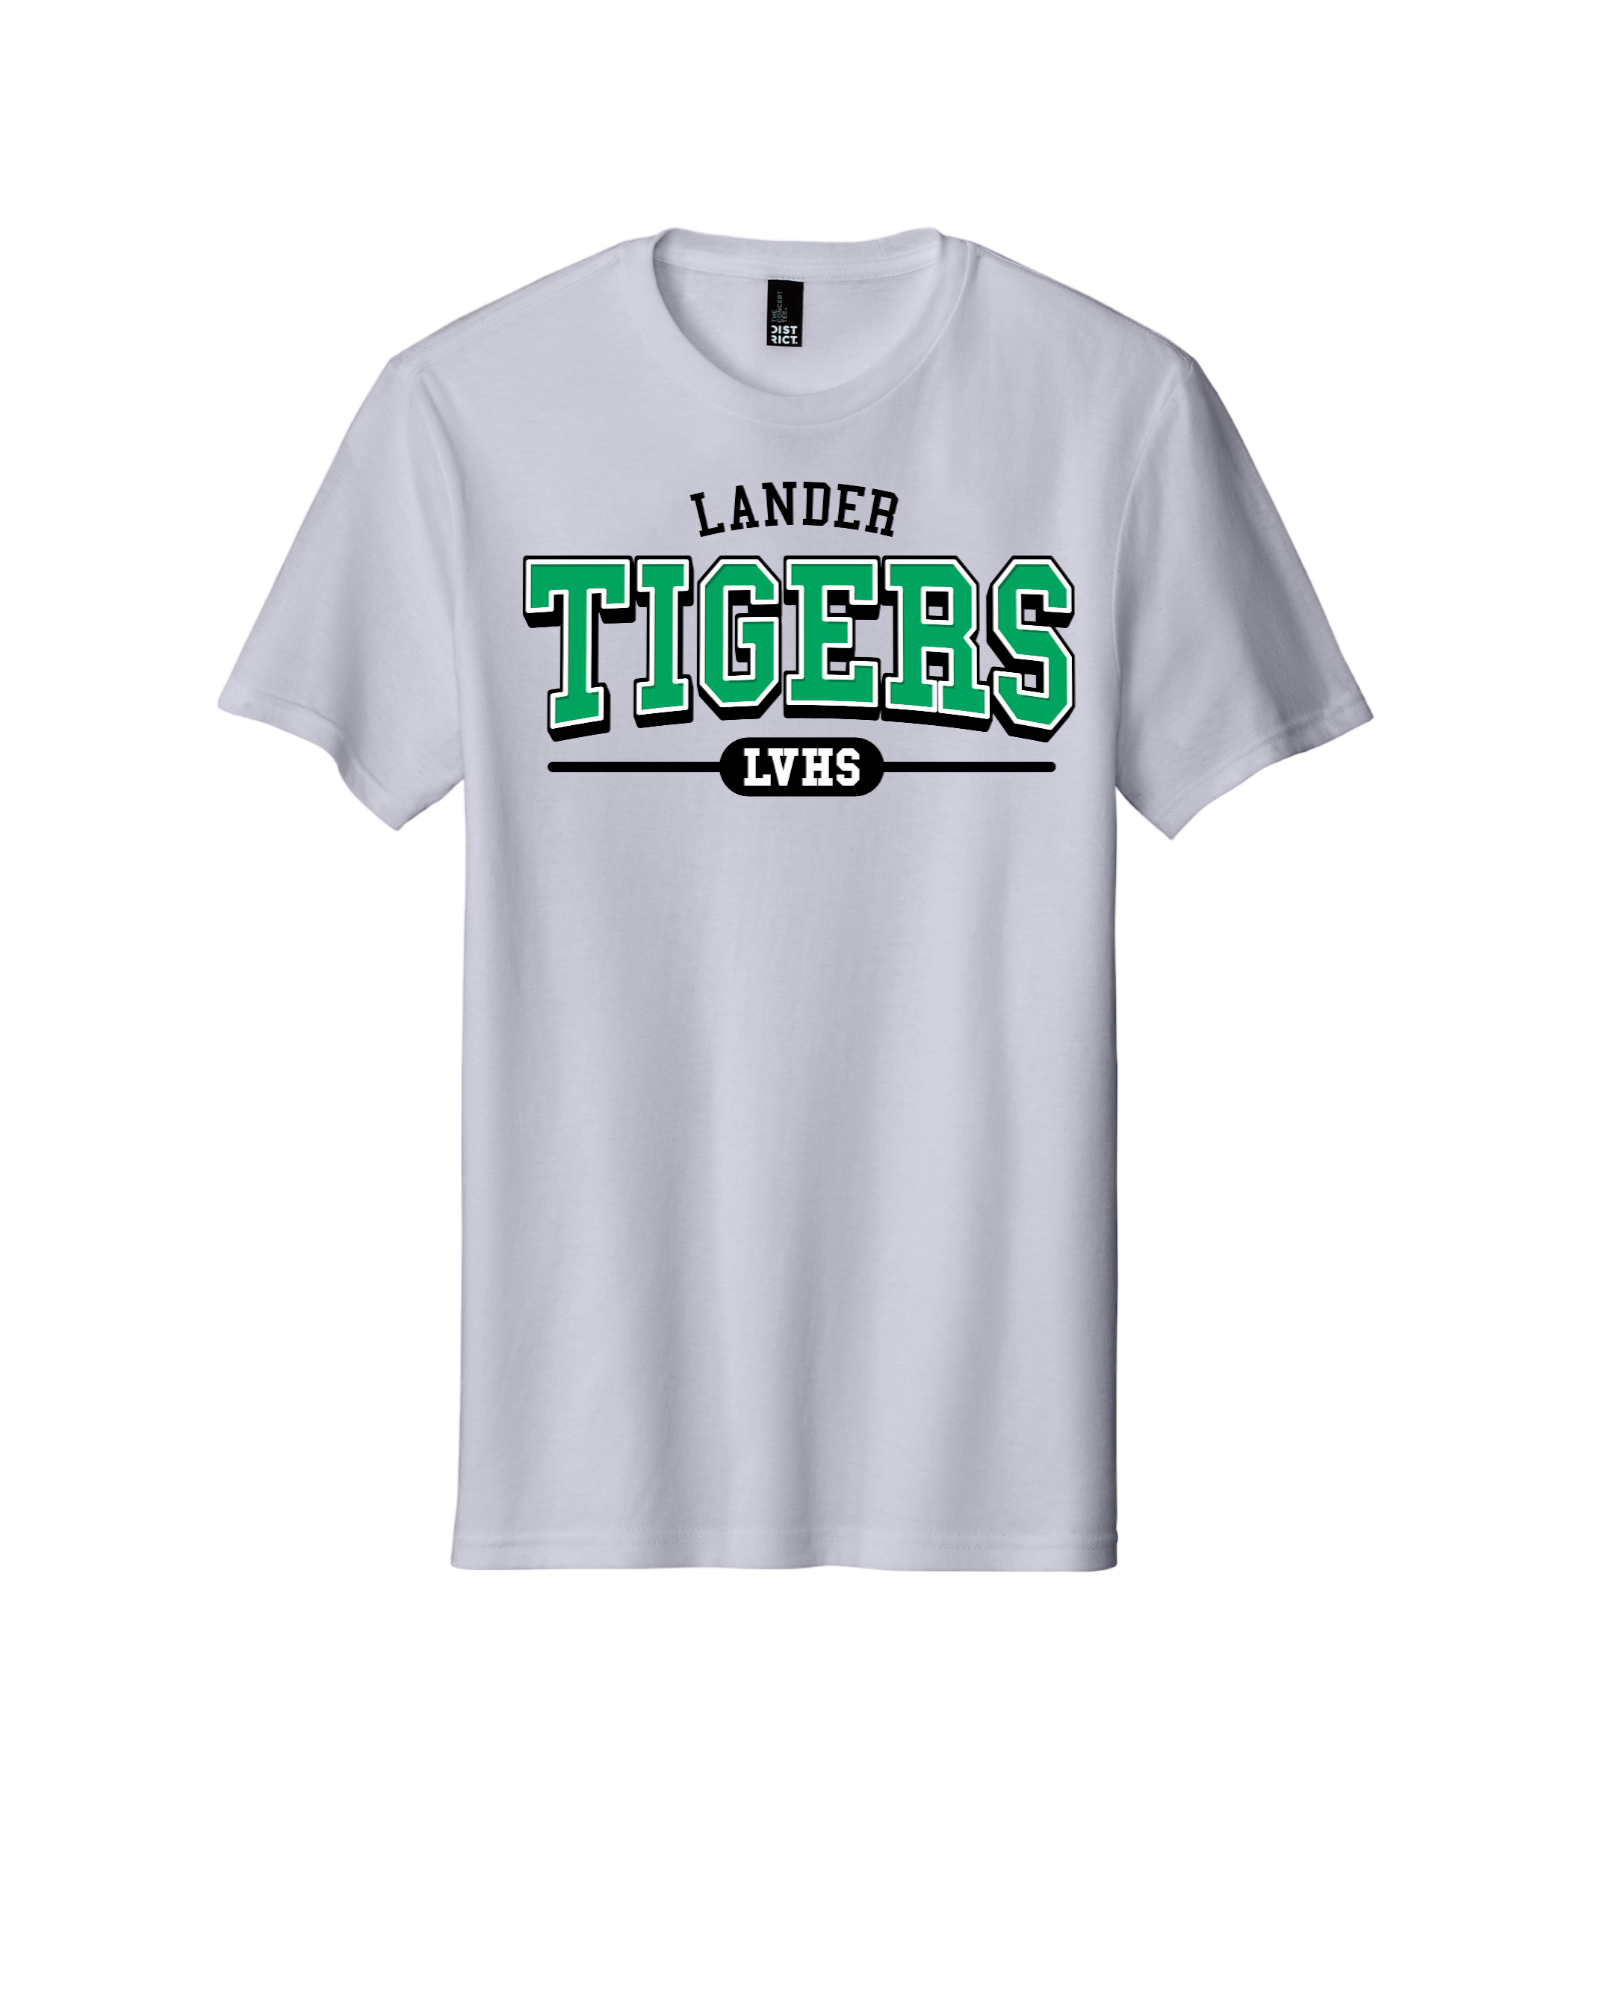 Lander Tigers Shirt